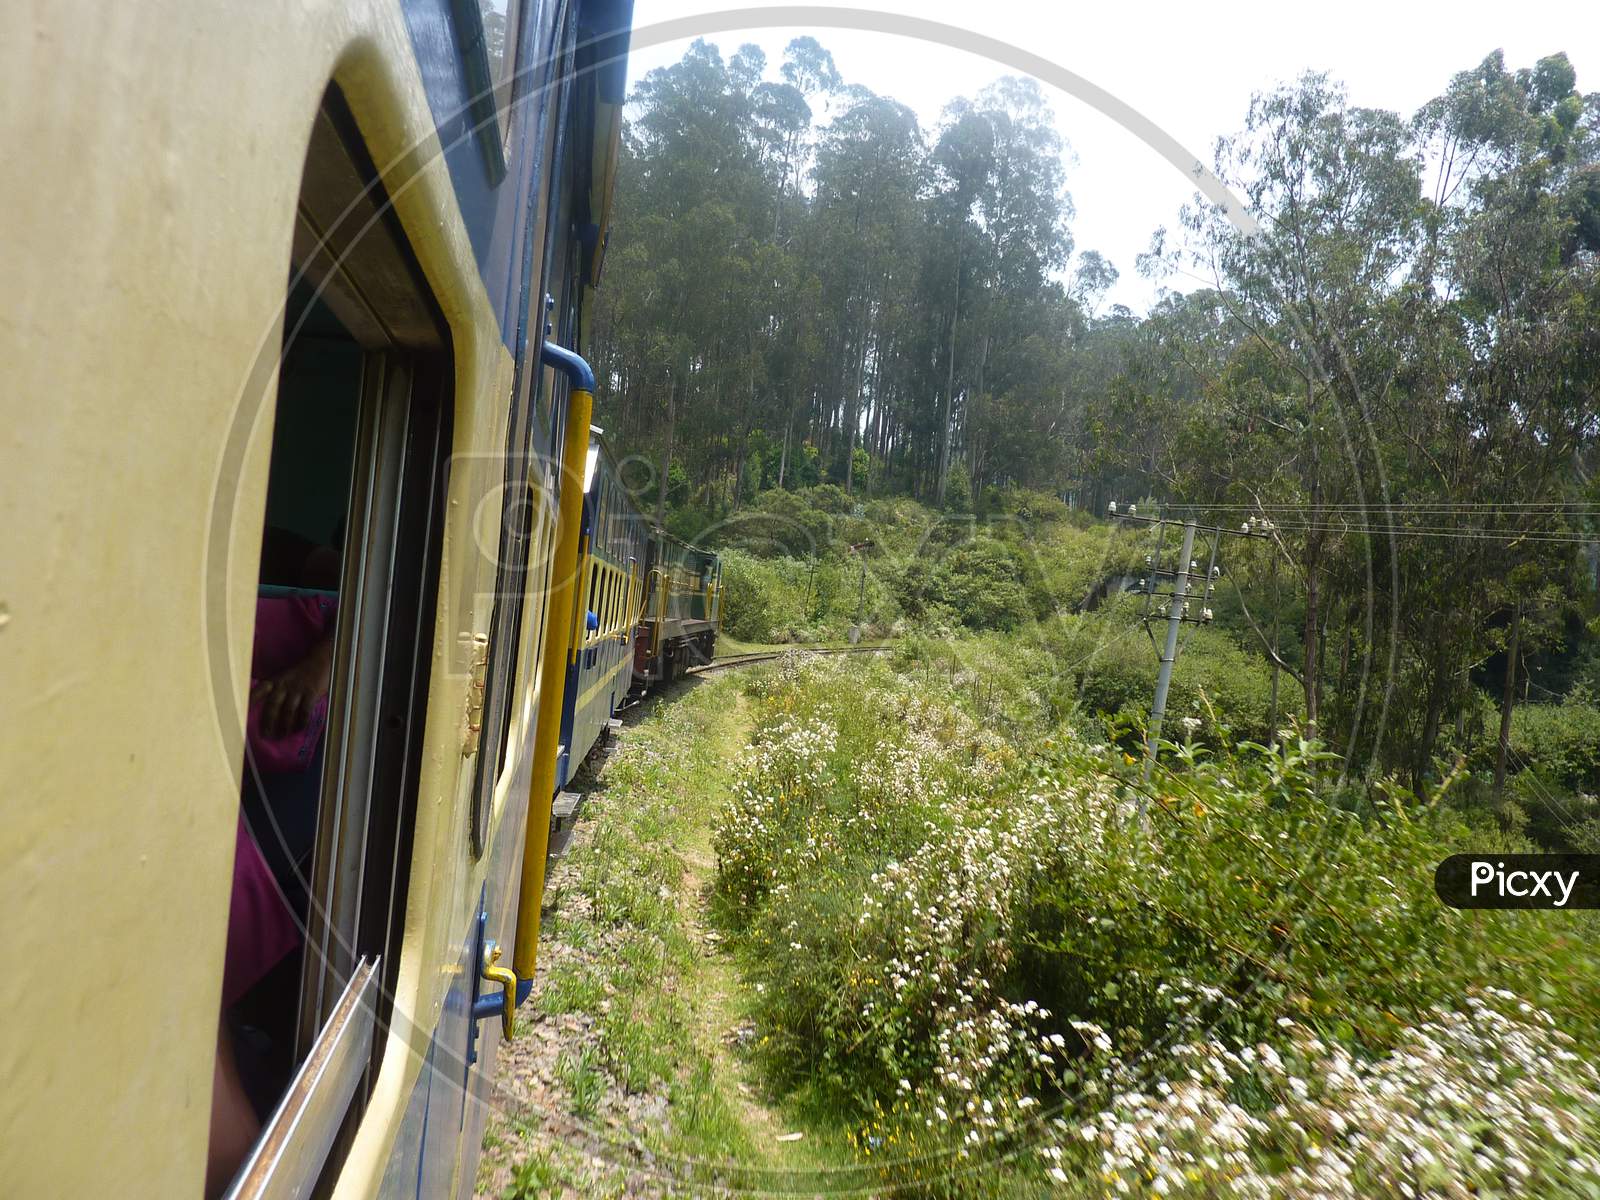 The Nilgiri Railways